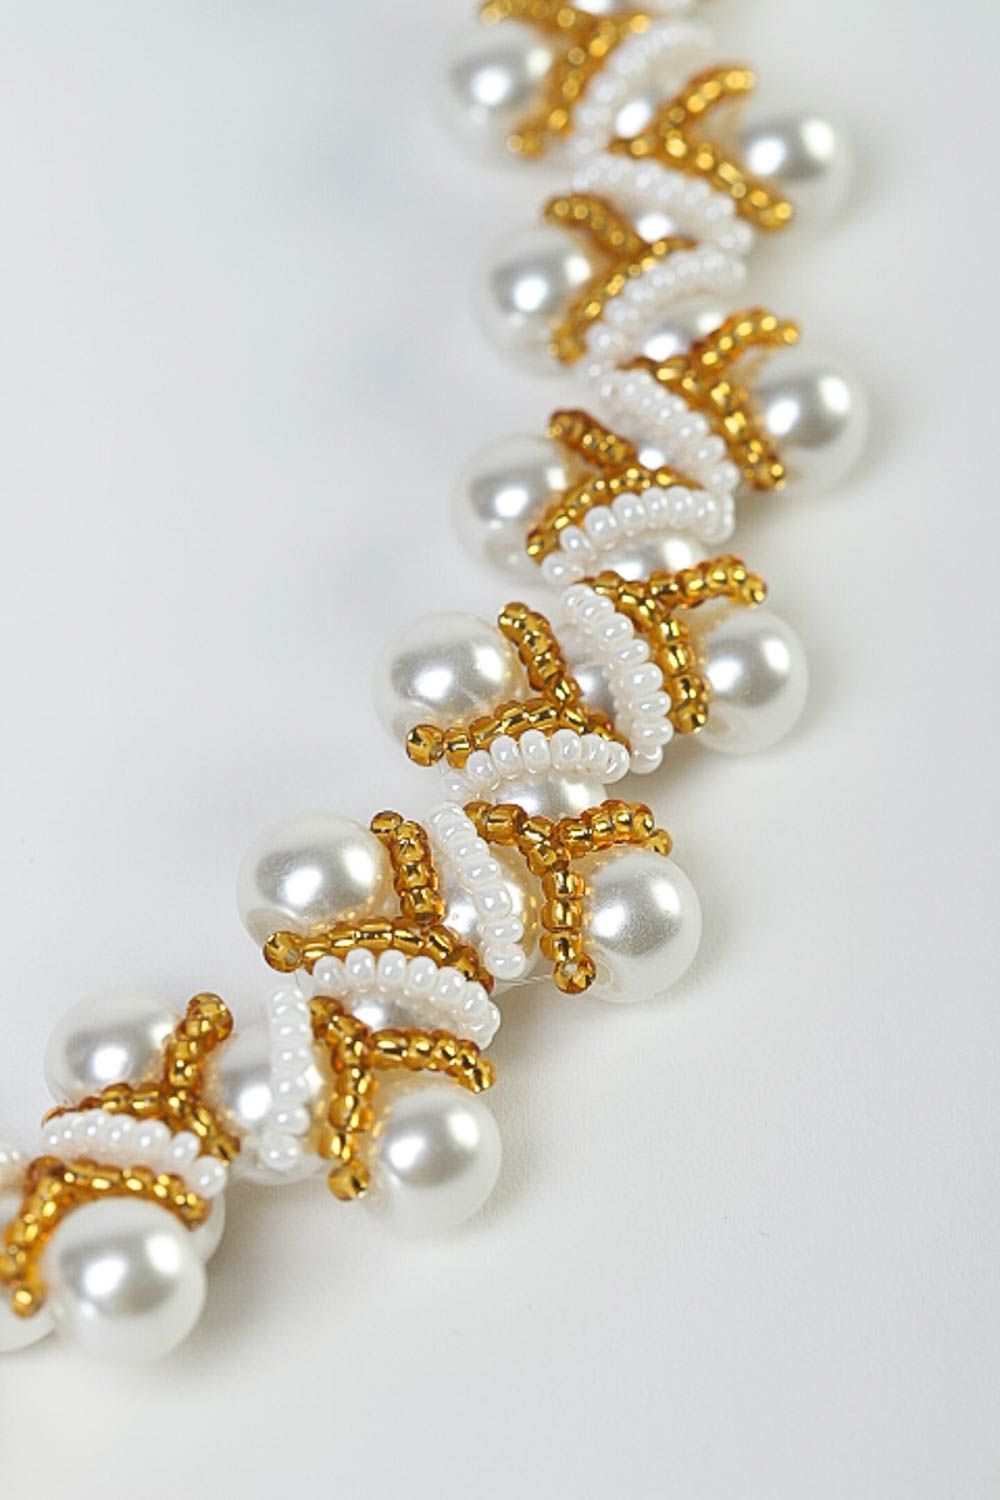 Beautiful handmade beaded necklace artisan jewelry designs bead weaving ideas photo 3